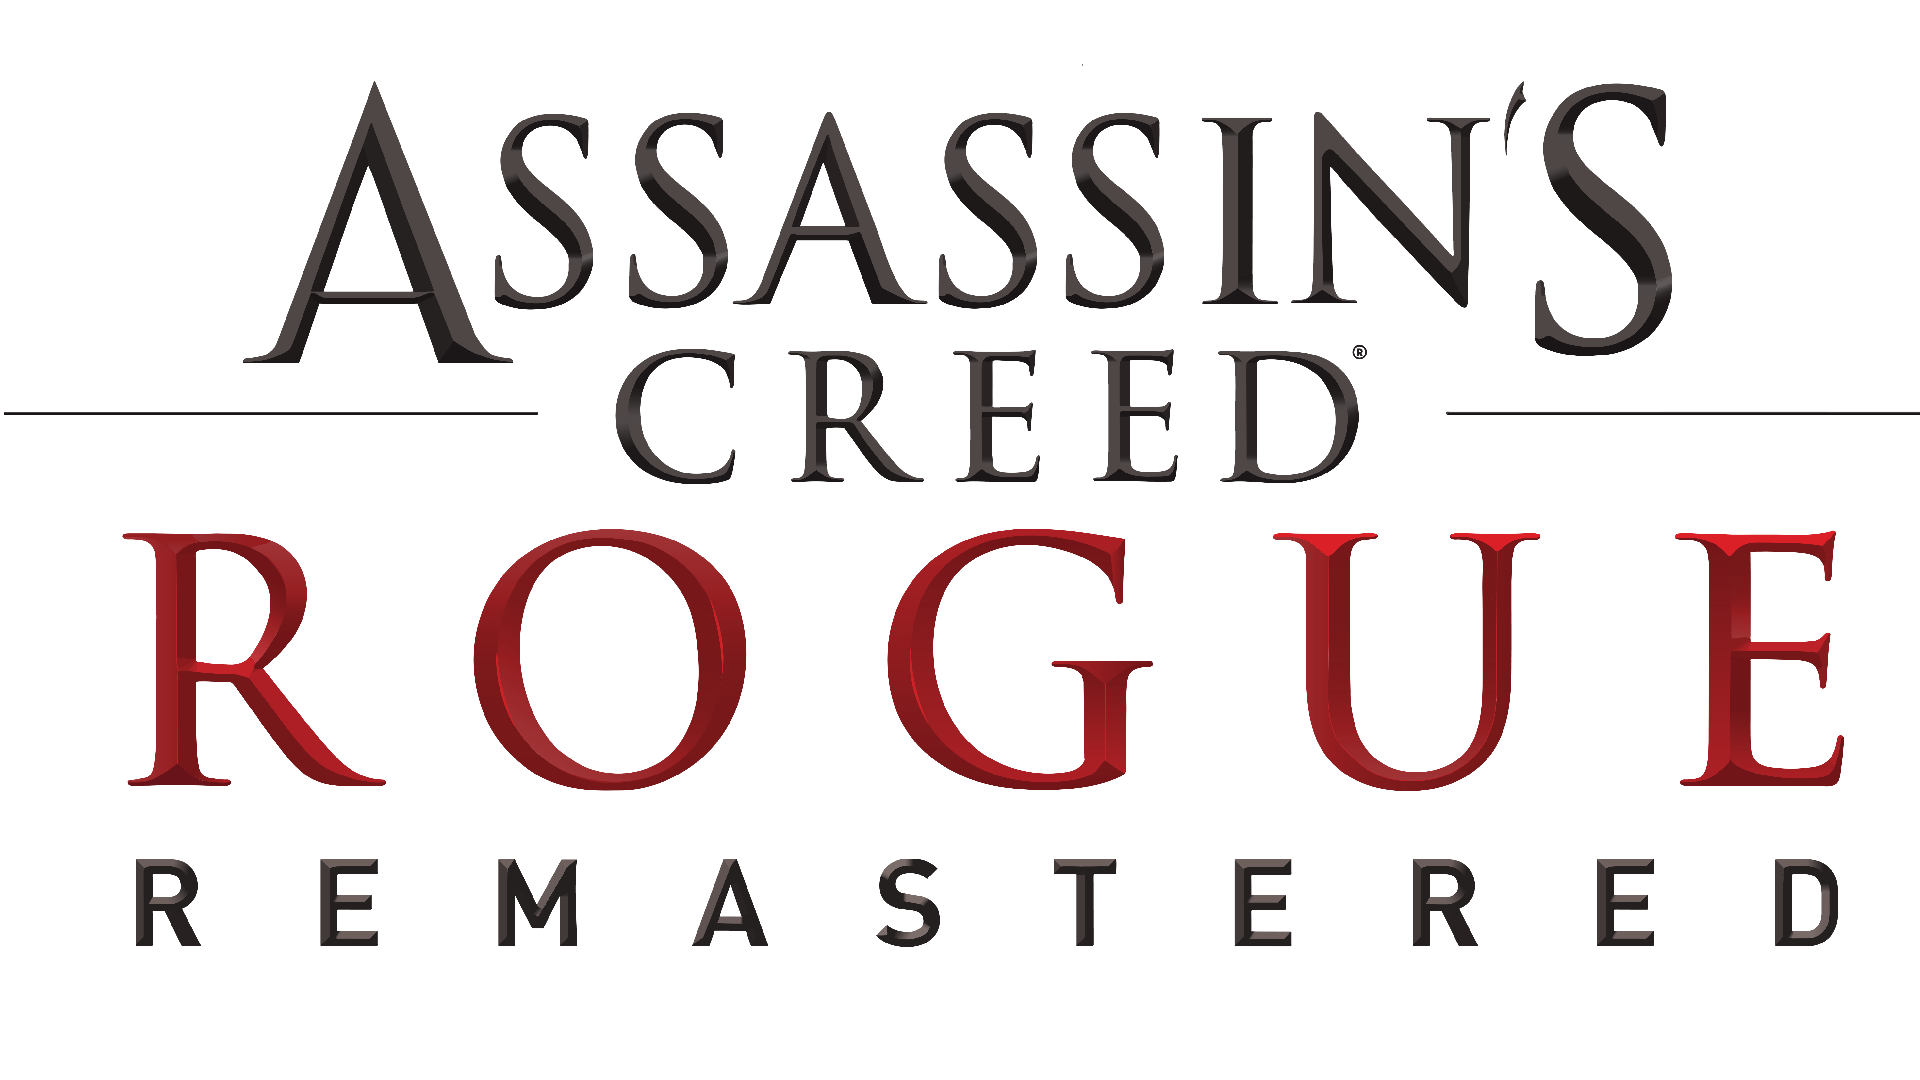 Assassin's Creed Rogue - Remasterizado - PlayStation 4